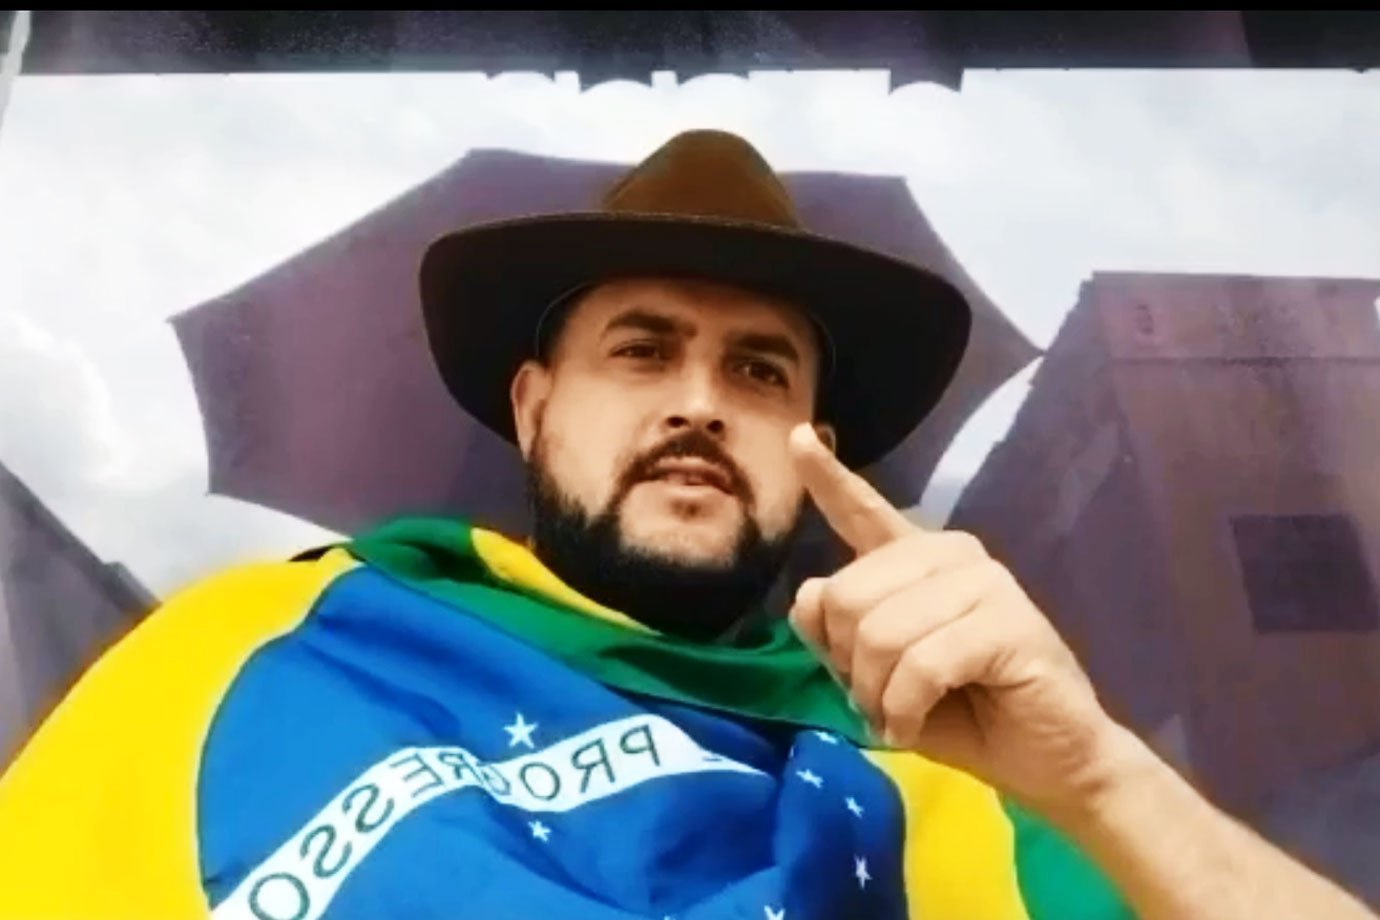 Zé Trovão busca refugio en México acusando persecución política en Brasil